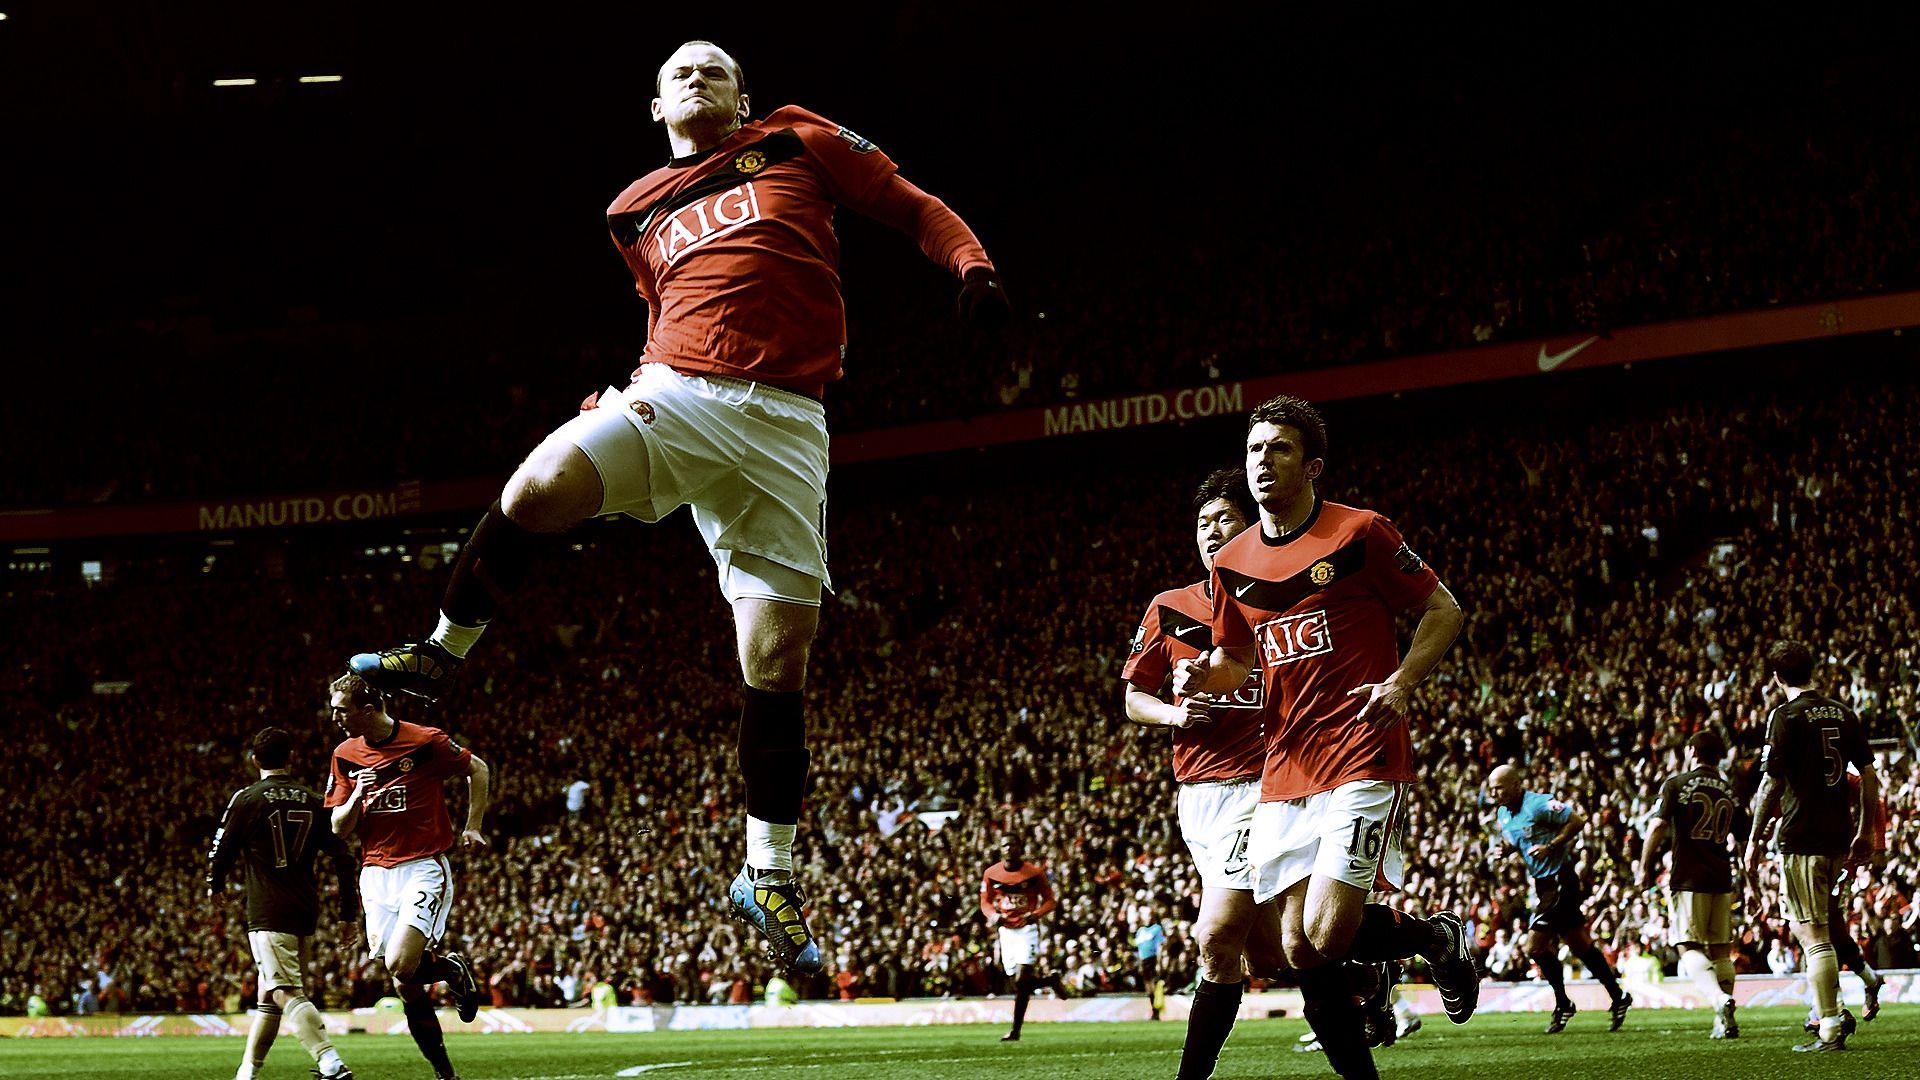 1920x1080 Manchester United FC, Premier League, Wayne Rooney Hình nền & Bối cảnh HD • 22603 • Wallur